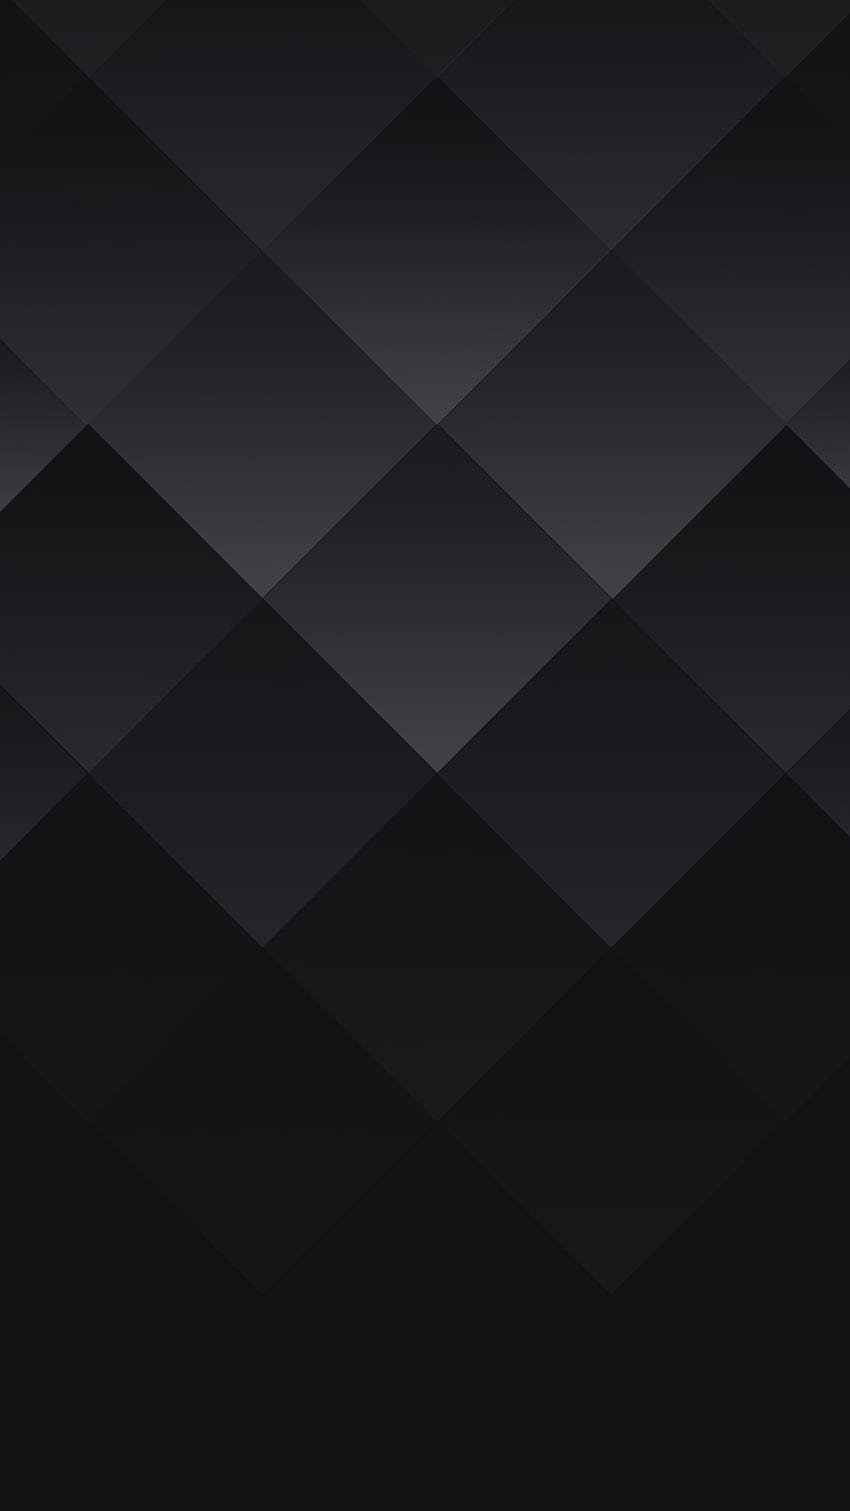 BlackBerry KEYone .png 1 440×2 560 píxeles. Papel De Parede De Madeira, Papel De Parede Android, Papel De Parede Celular, Dark Pixel fondo de pantalla del teléfono